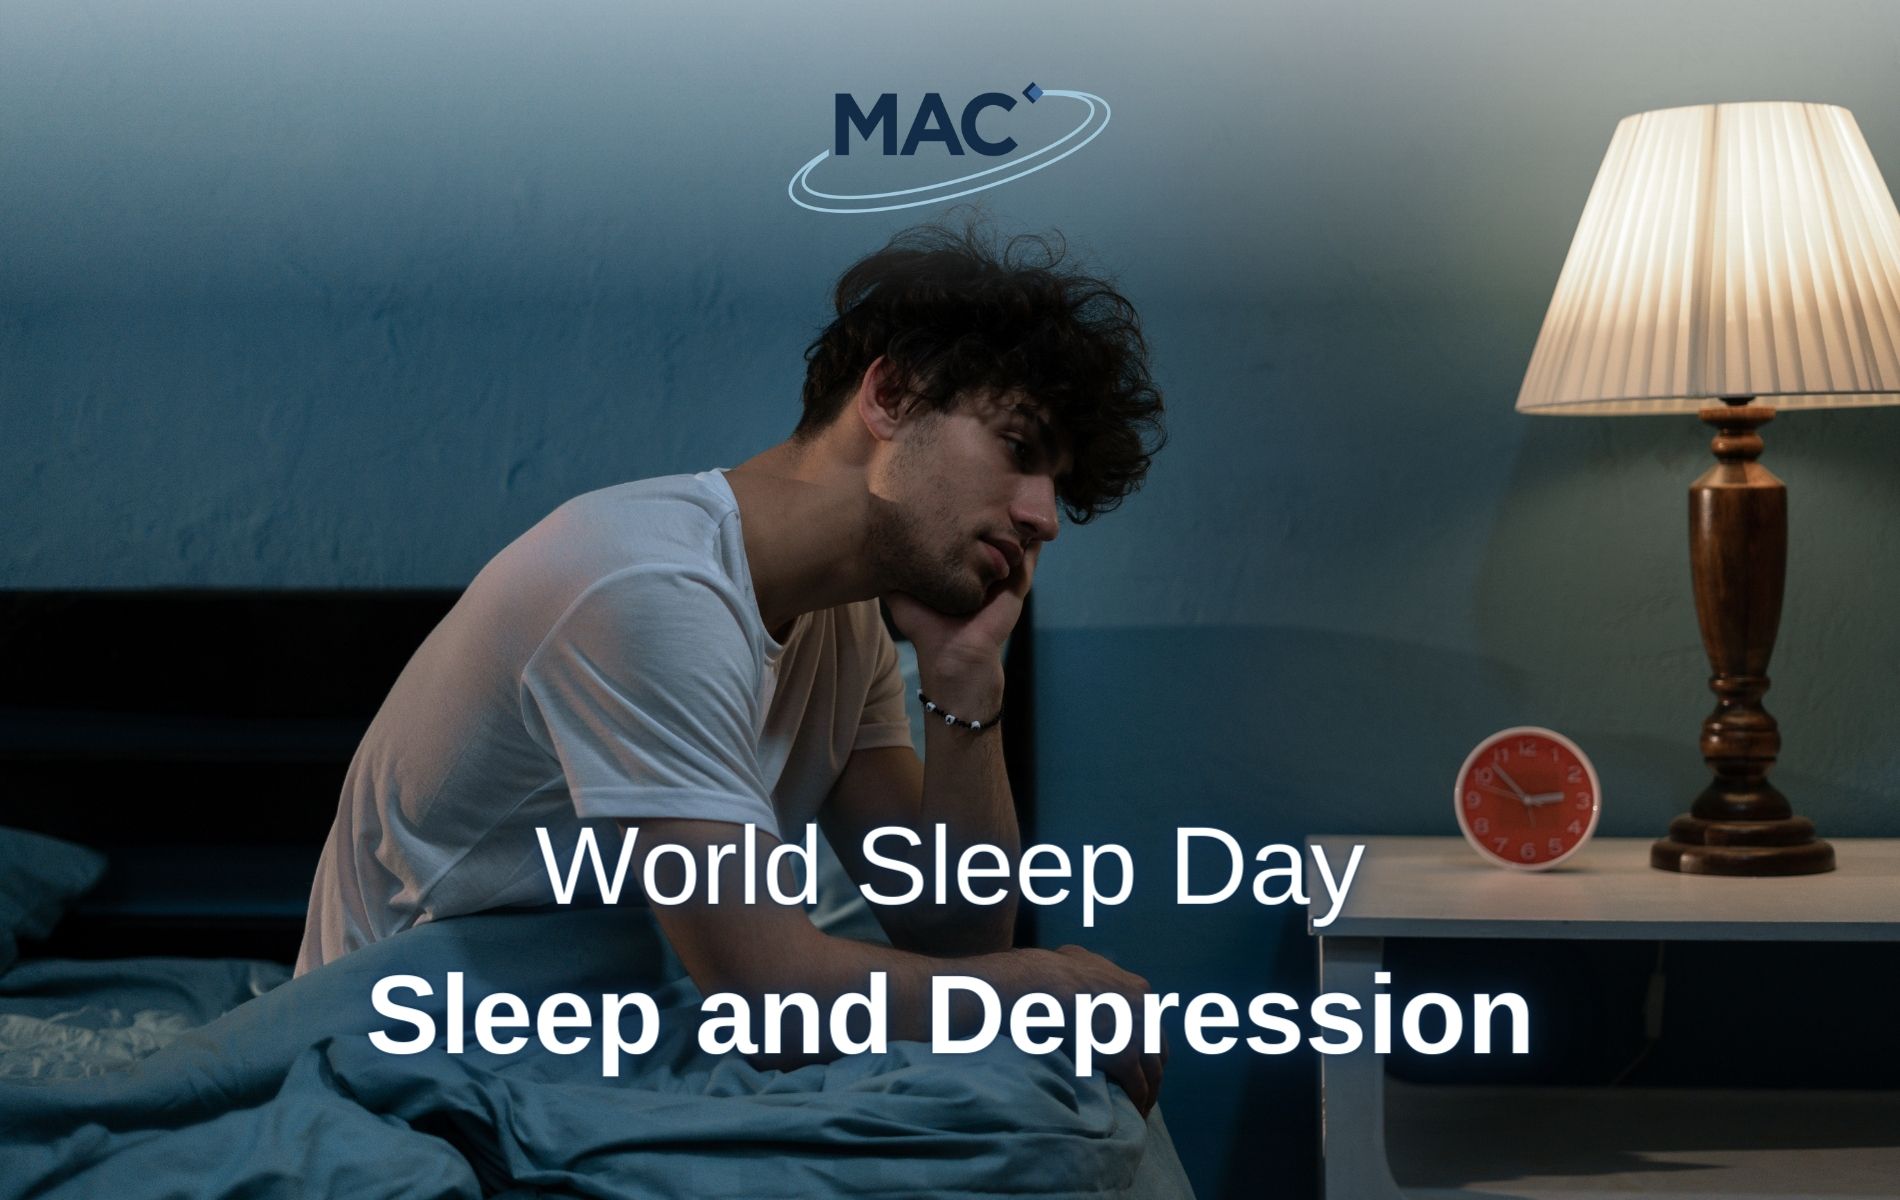 Depression and Sleep